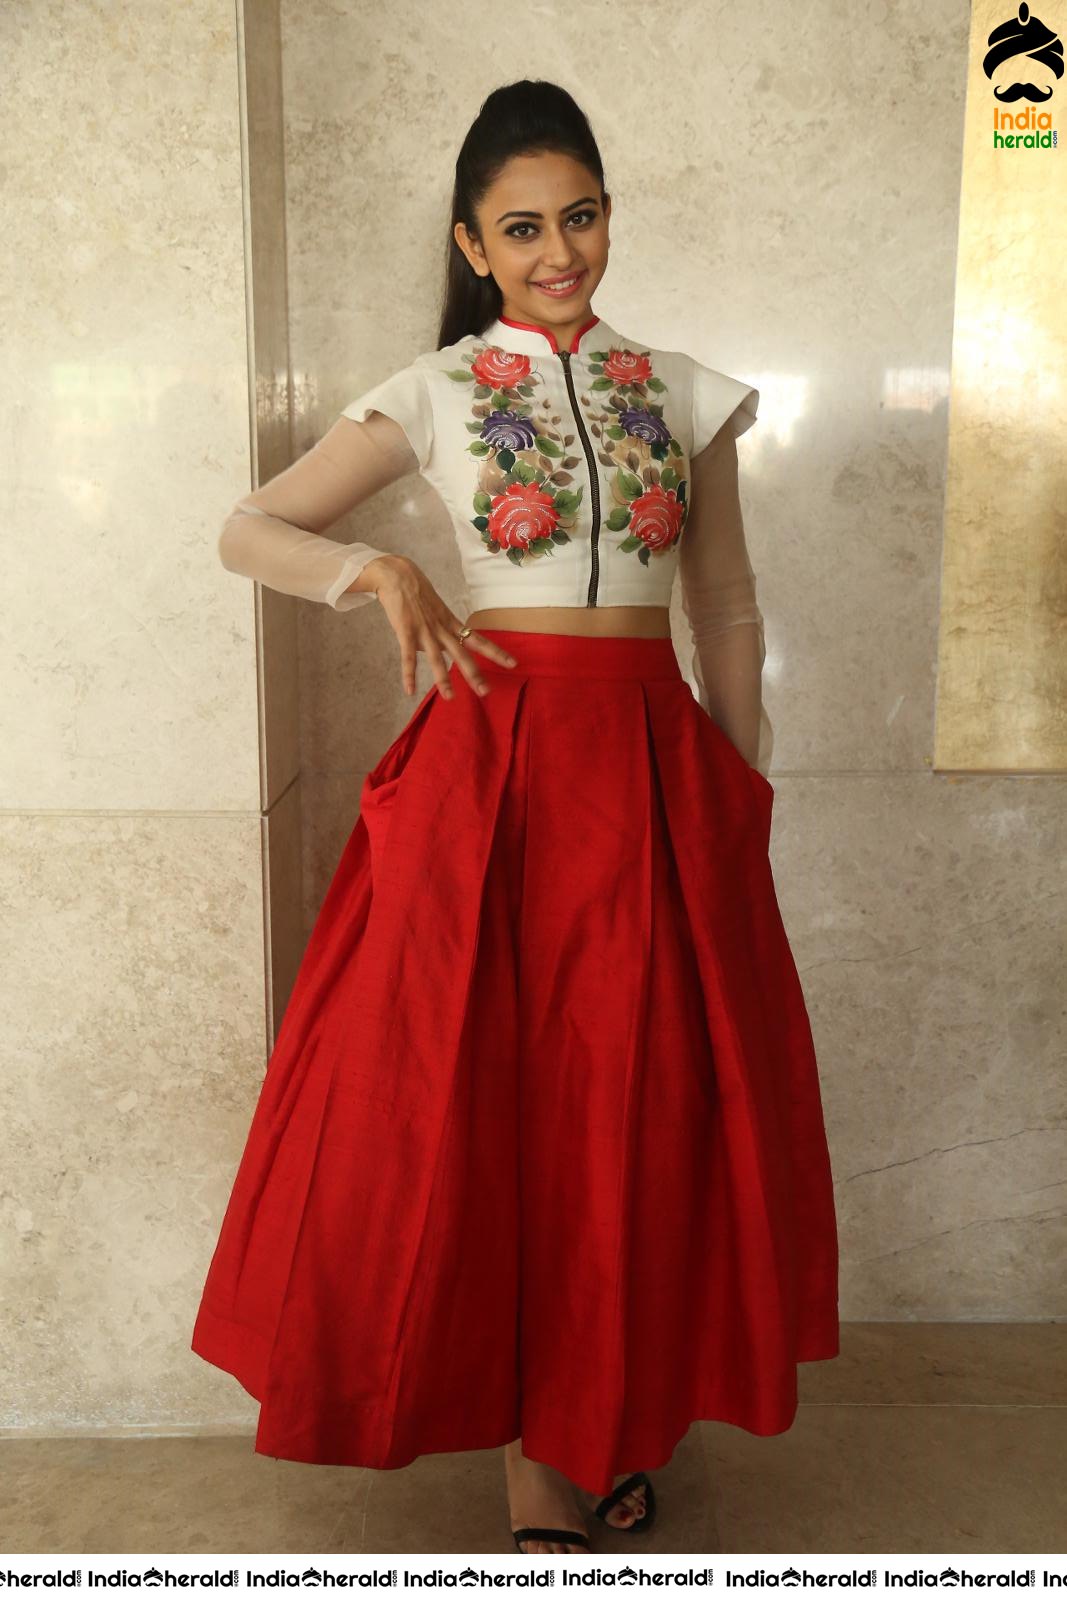 Rakul Preet seen like an Angel in Floral Top and Red Long Skirt Set 1